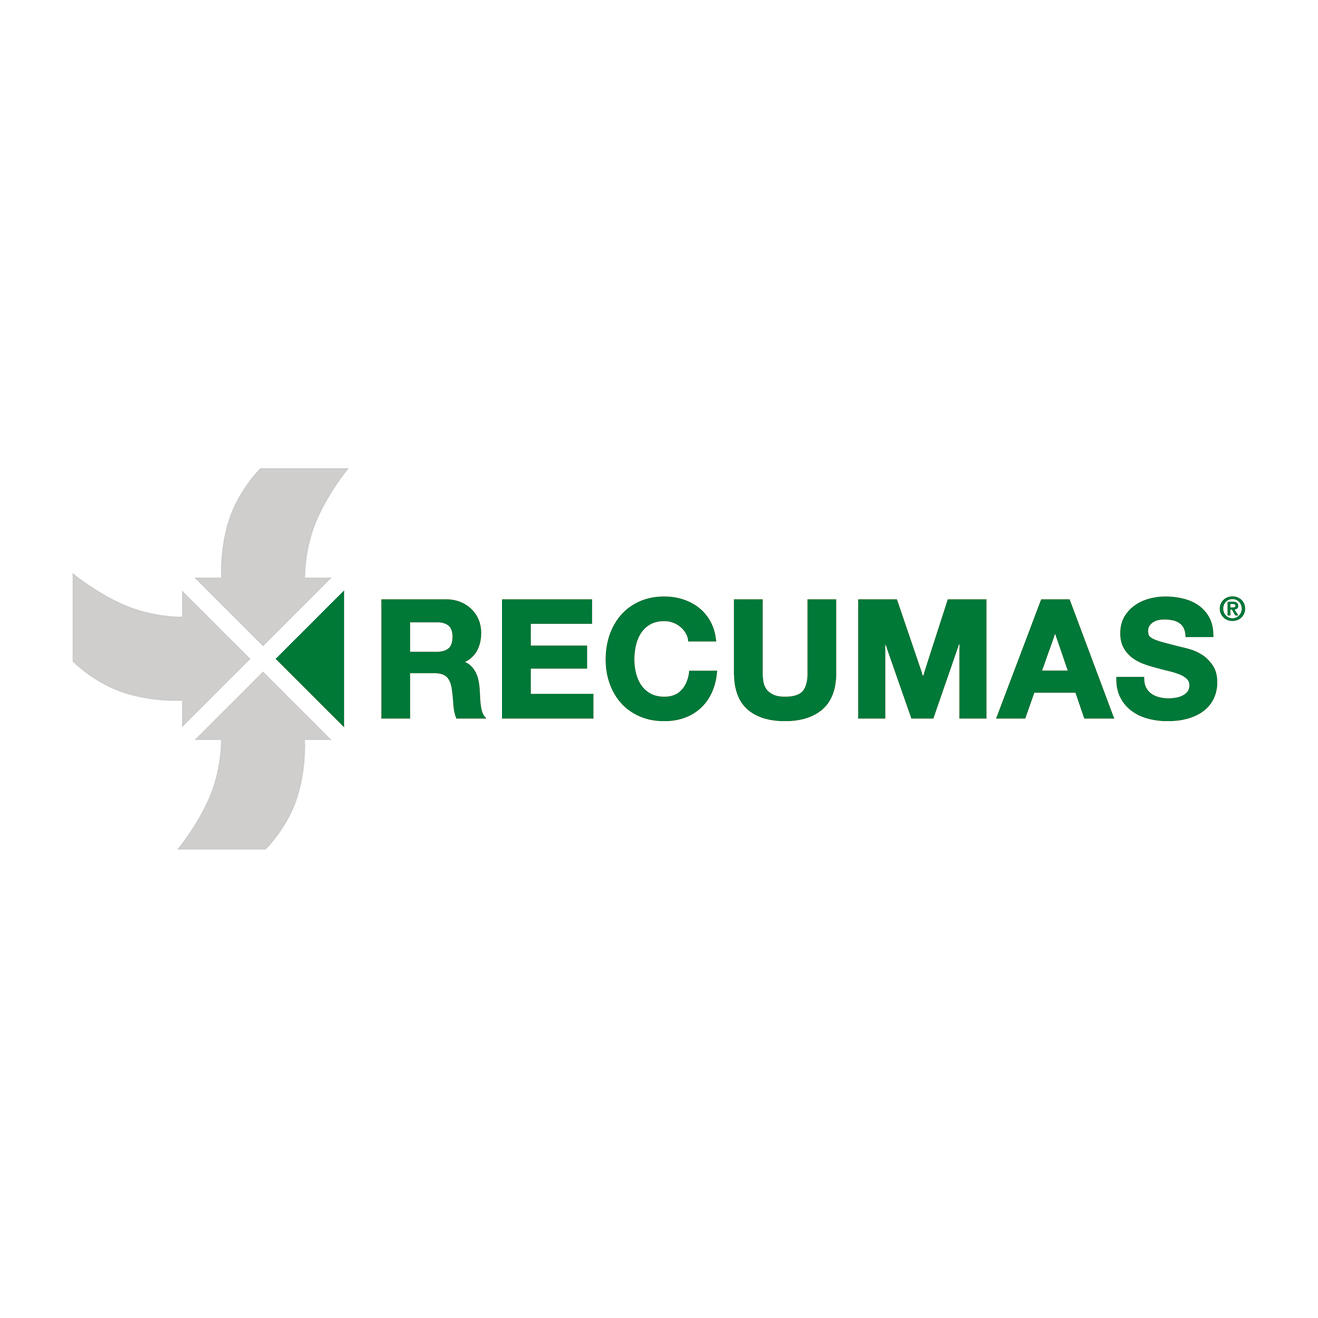 Recumas Logo